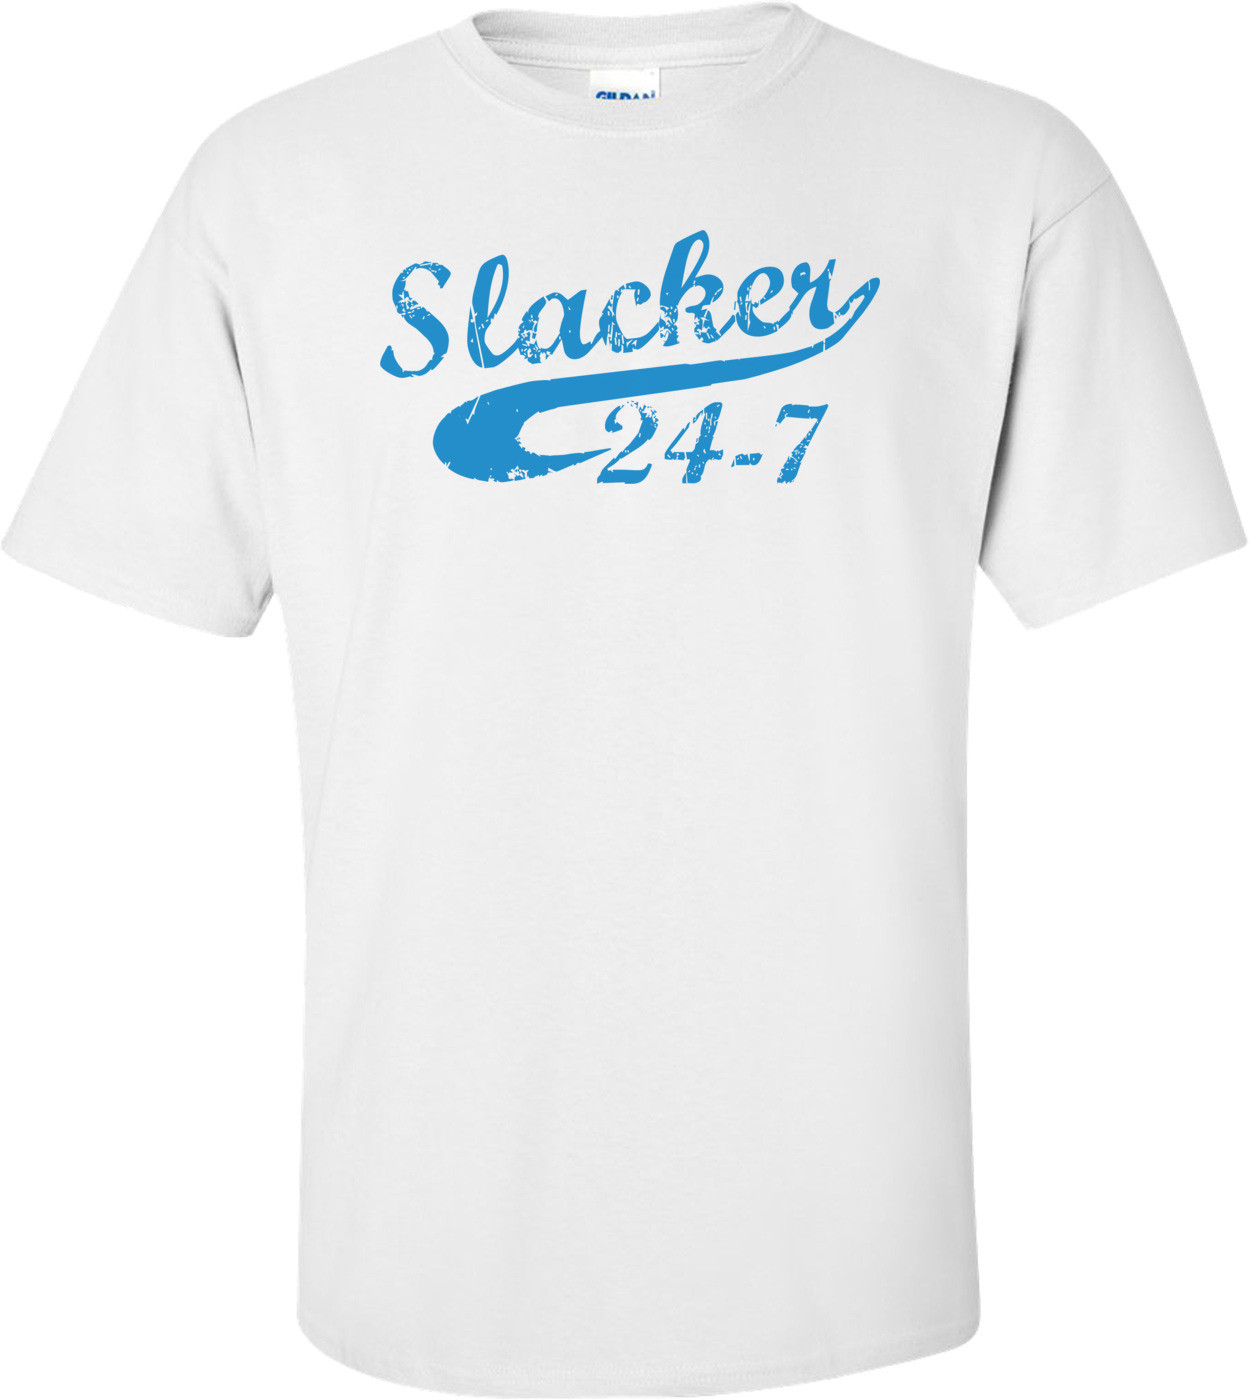 Slacker 24-7 T-shirt